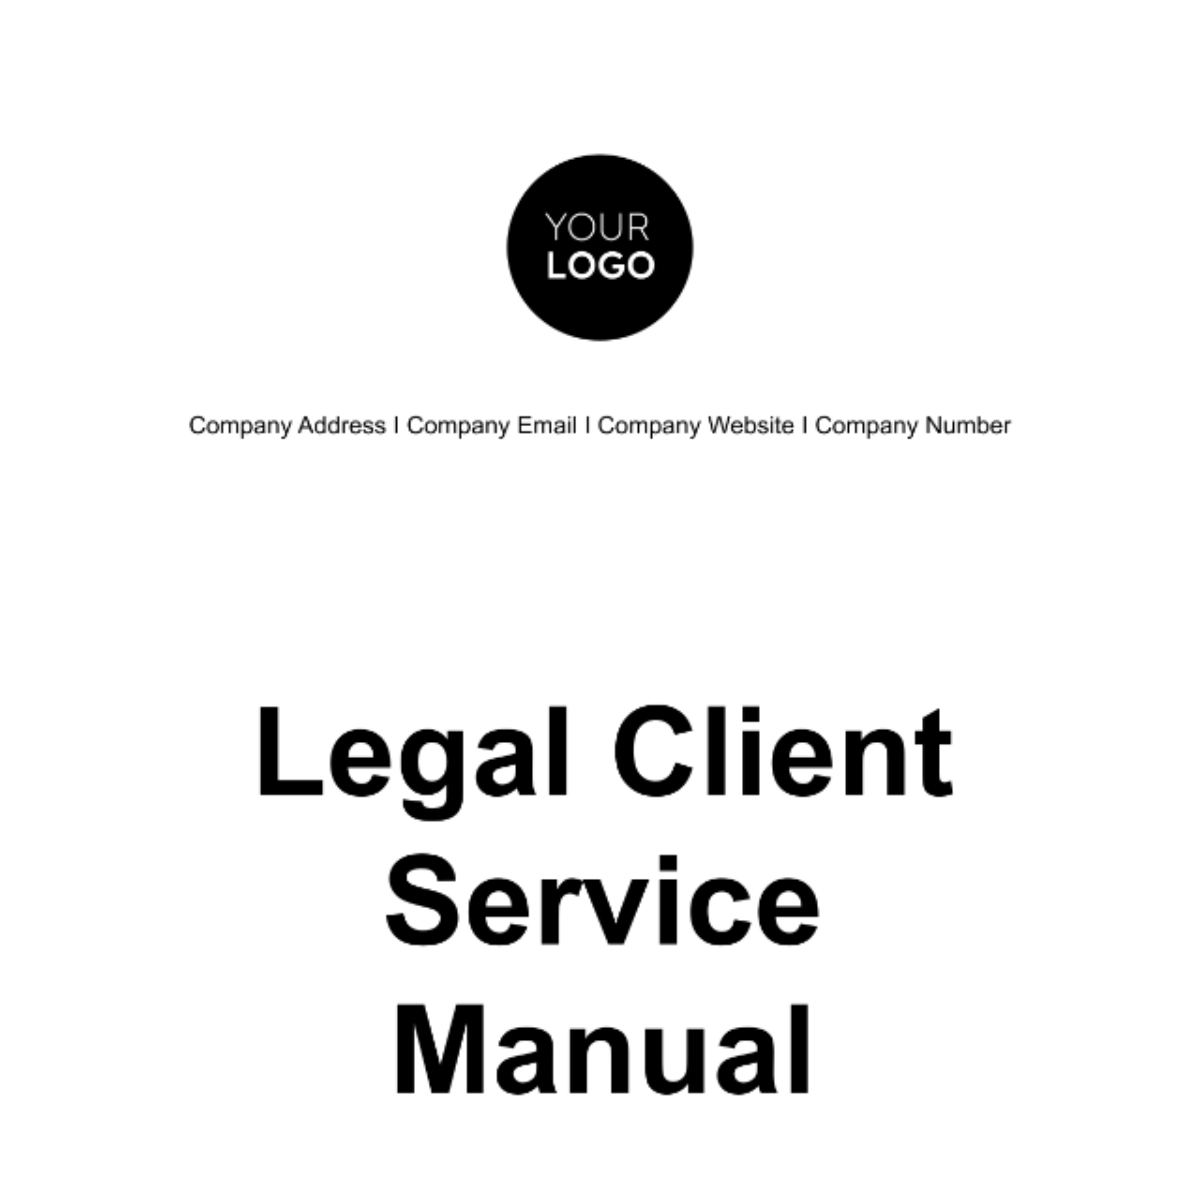 Legal Client Service Manual Template